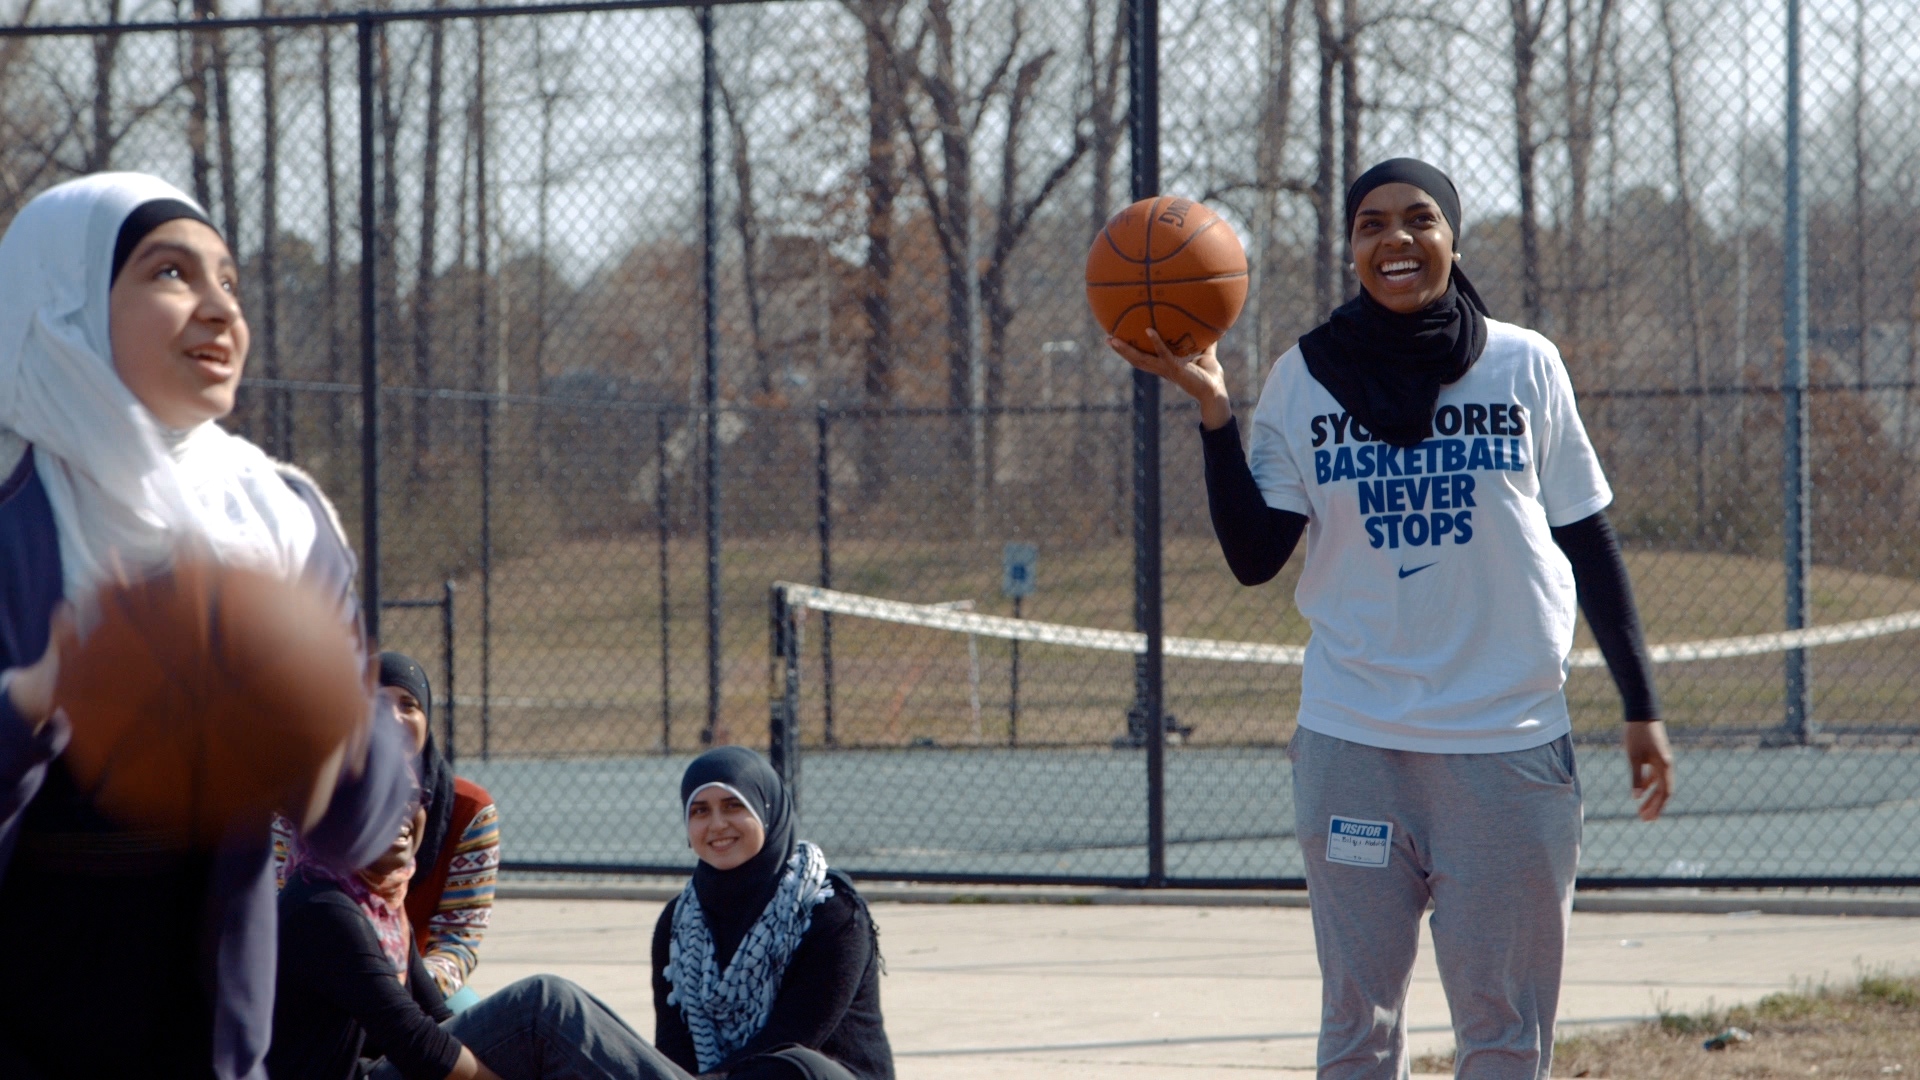 bilqis abdul qaadir hijab ban basketball